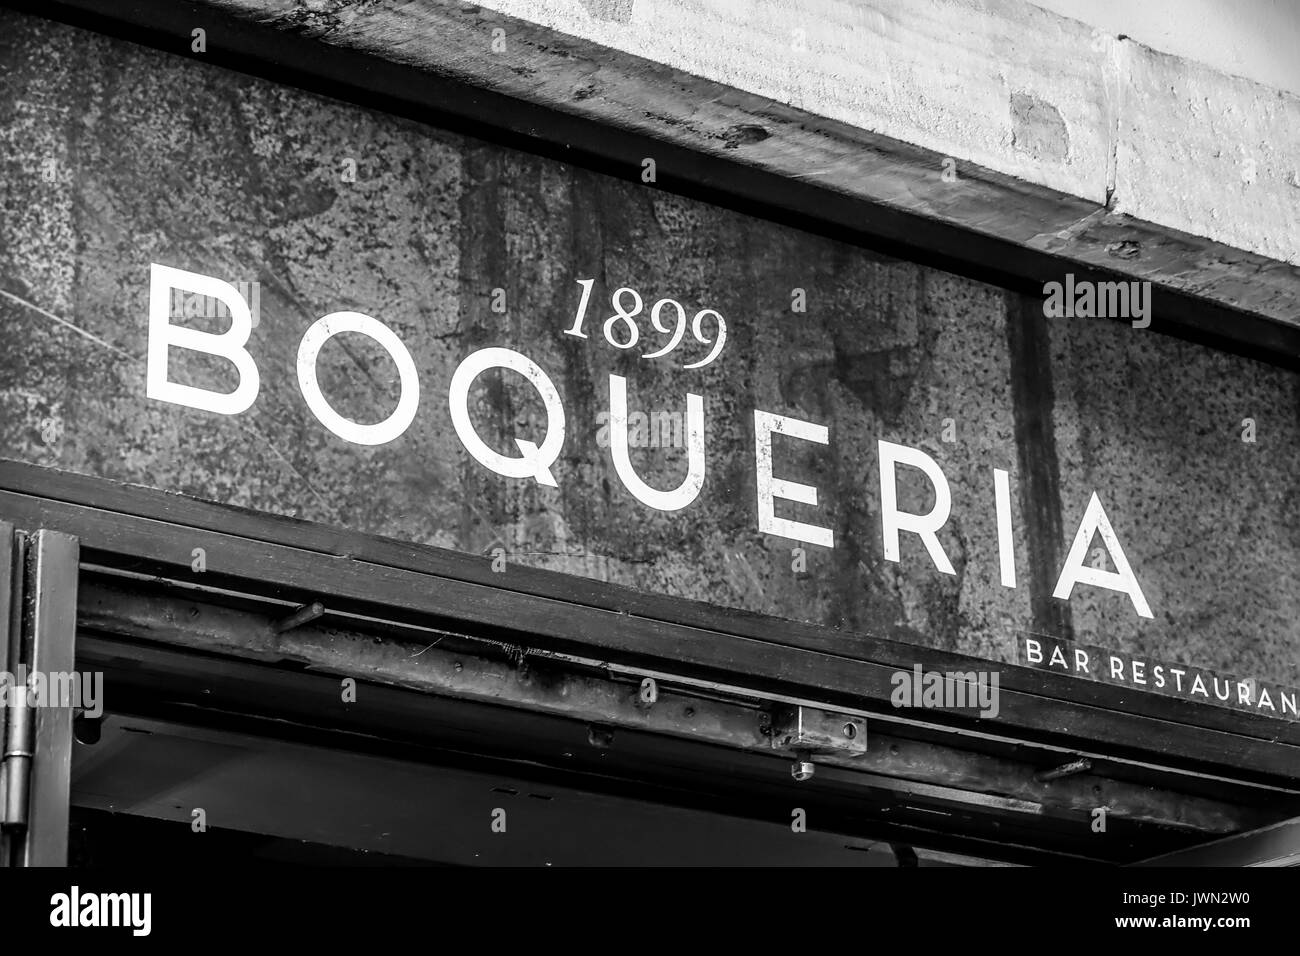 Restaurant Boqueria at Rambla Barcelona - BARCELONA / SPAIN - OCTOBER 2, 2016 Stock Photo